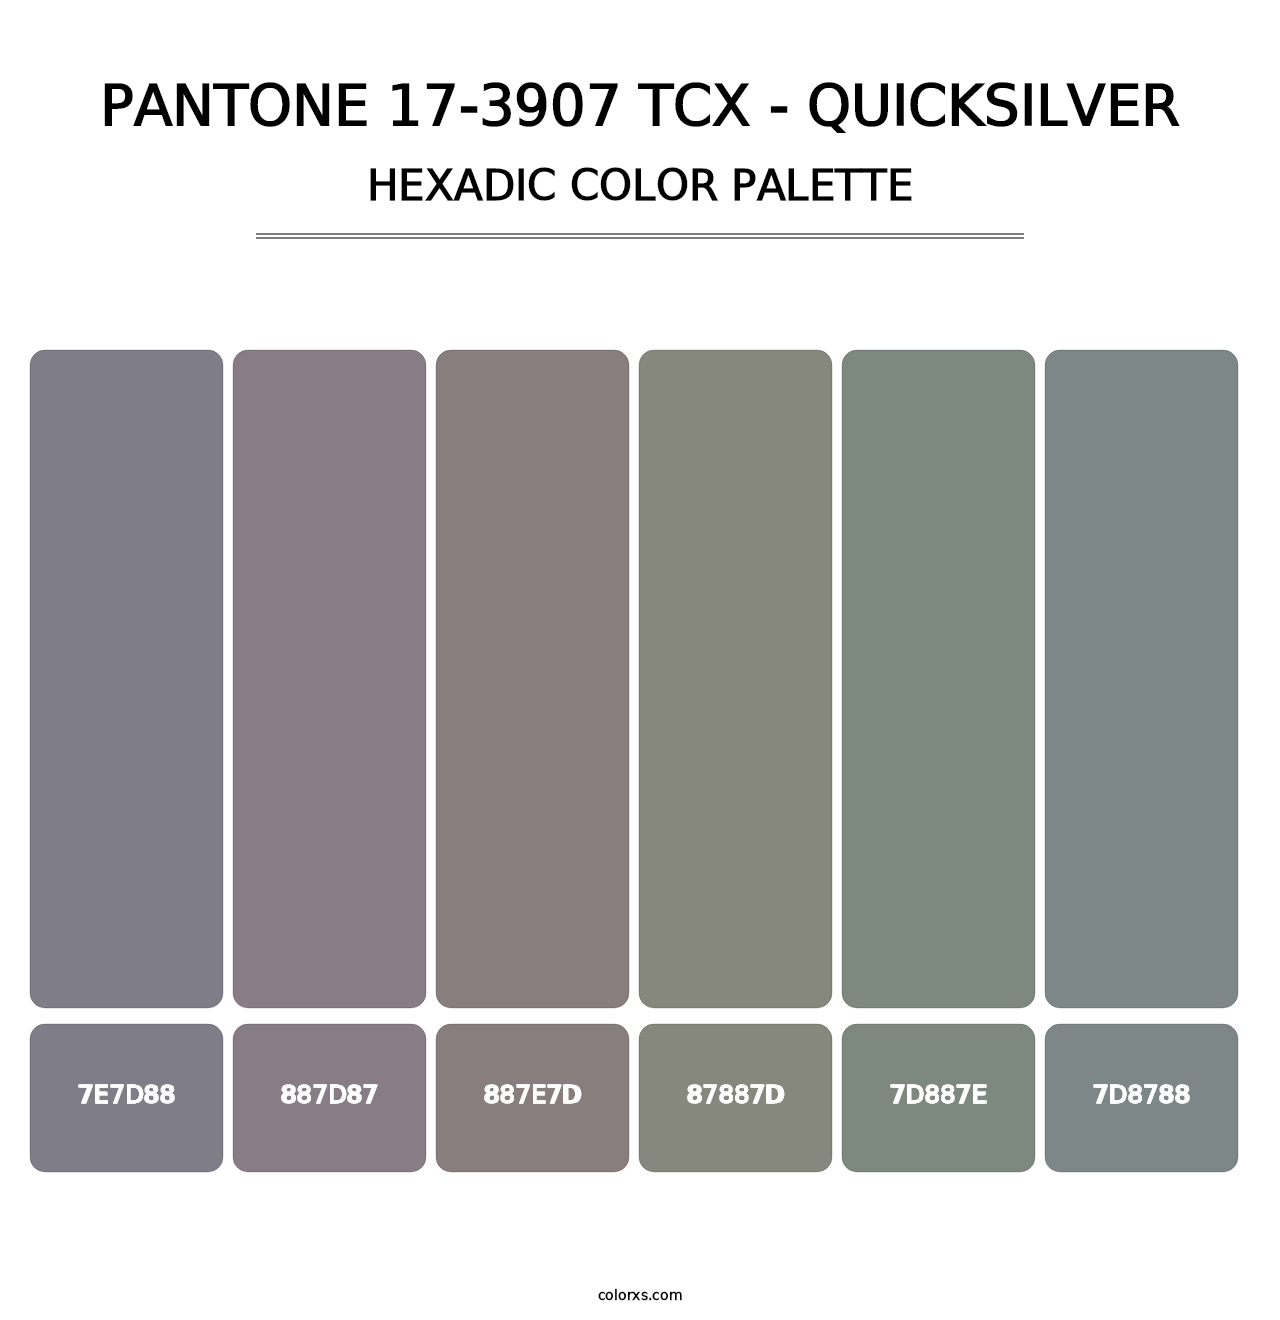 PANTONE 17-3907 TCX - Quicksilver - Hexadic Color Palette